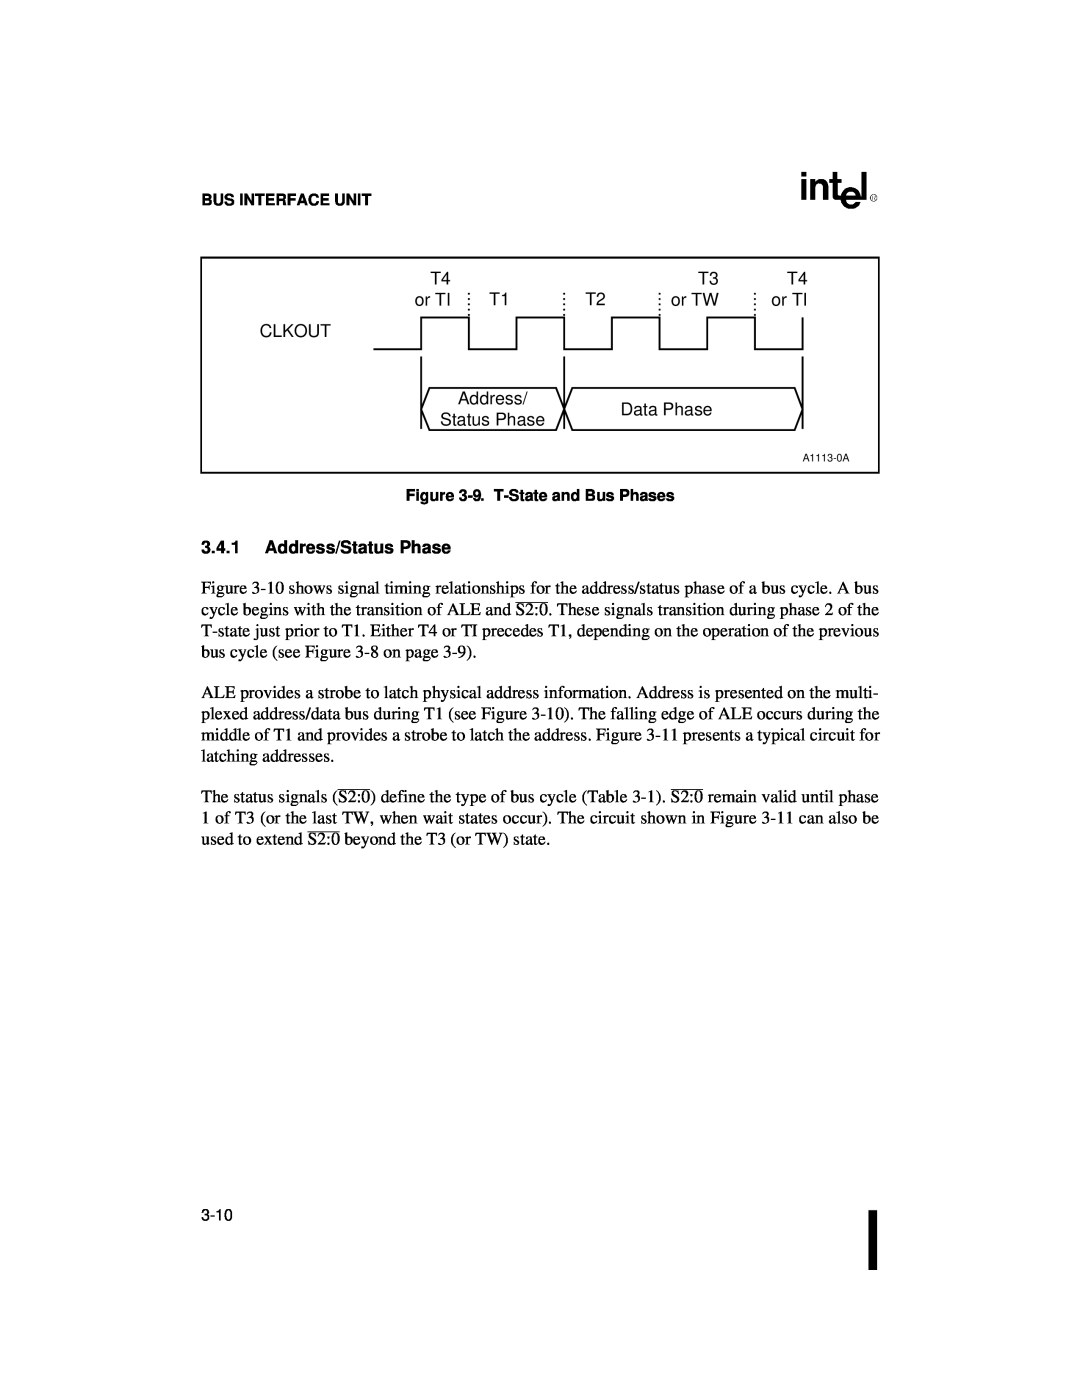 Intel 80C186XL, 80C188XL user manual 3.4.1Address/Status Phase 